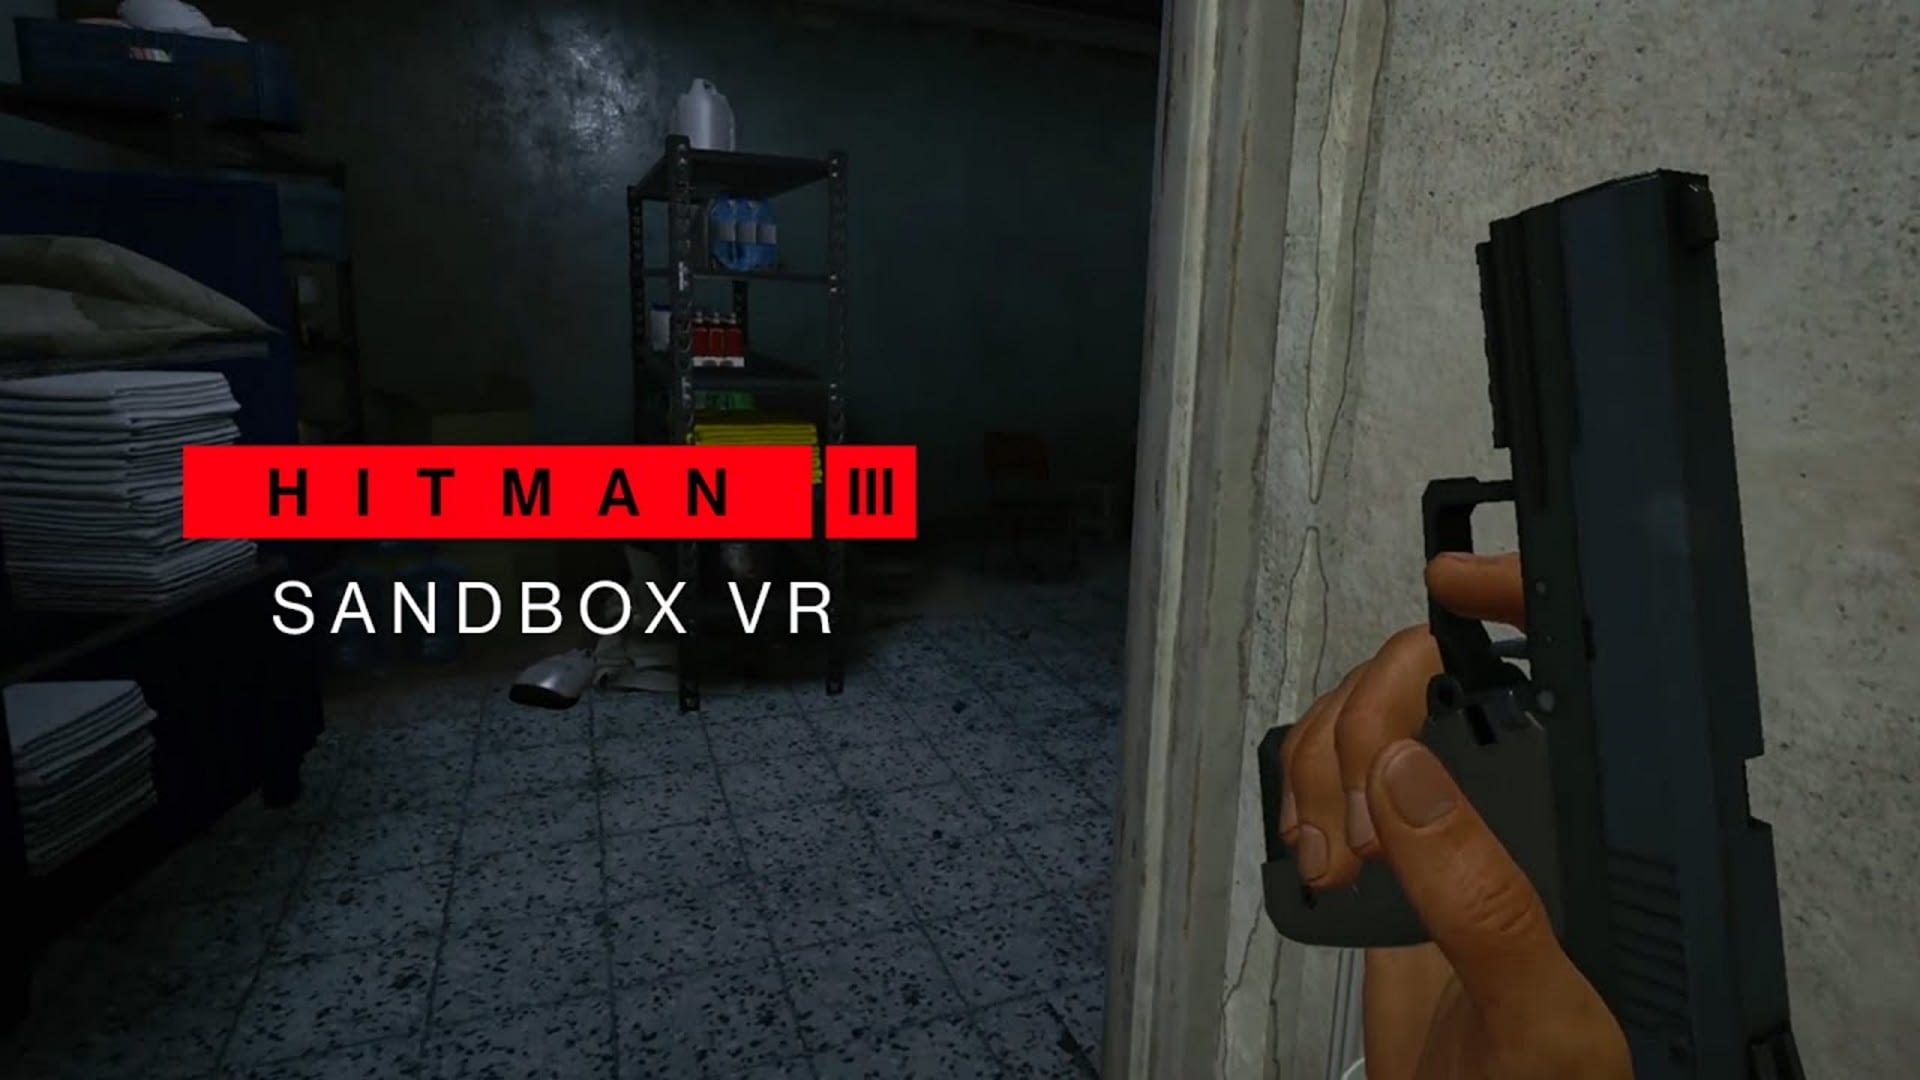 Insane PSVR gameplay for Hitman 3 shows highly-immersive sandbox